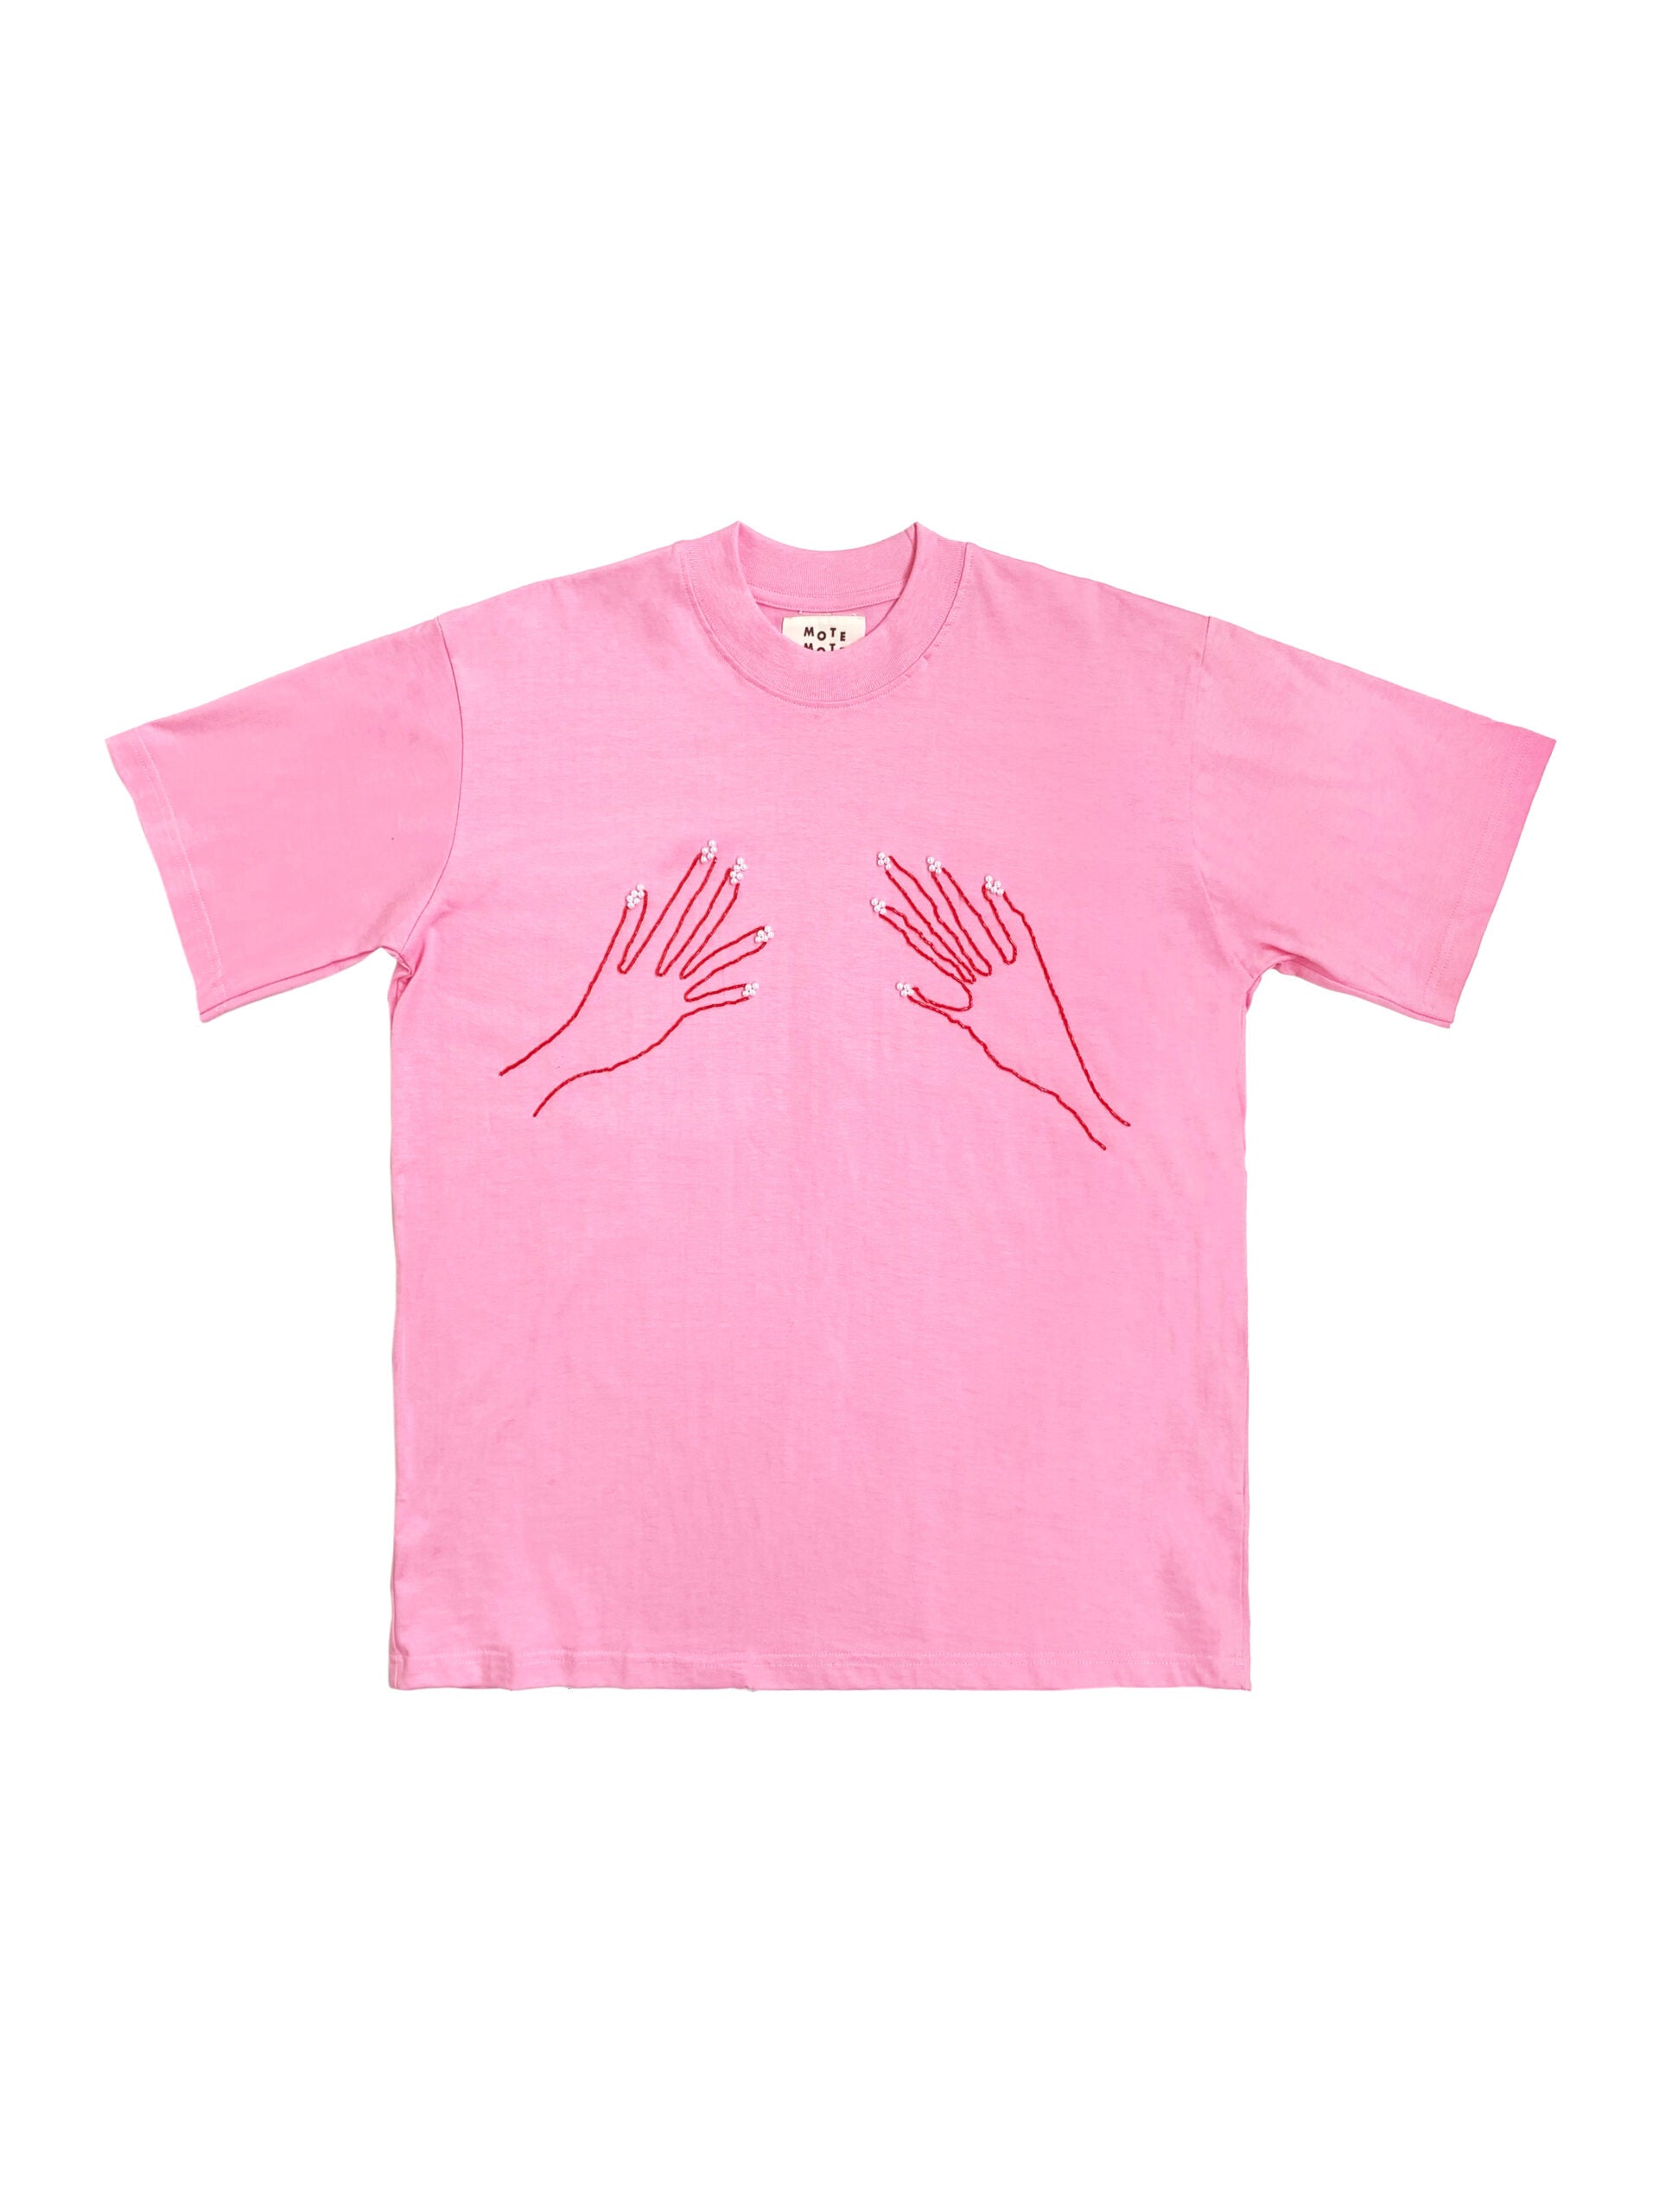 Hands Tshirt Pink - Mote Mote